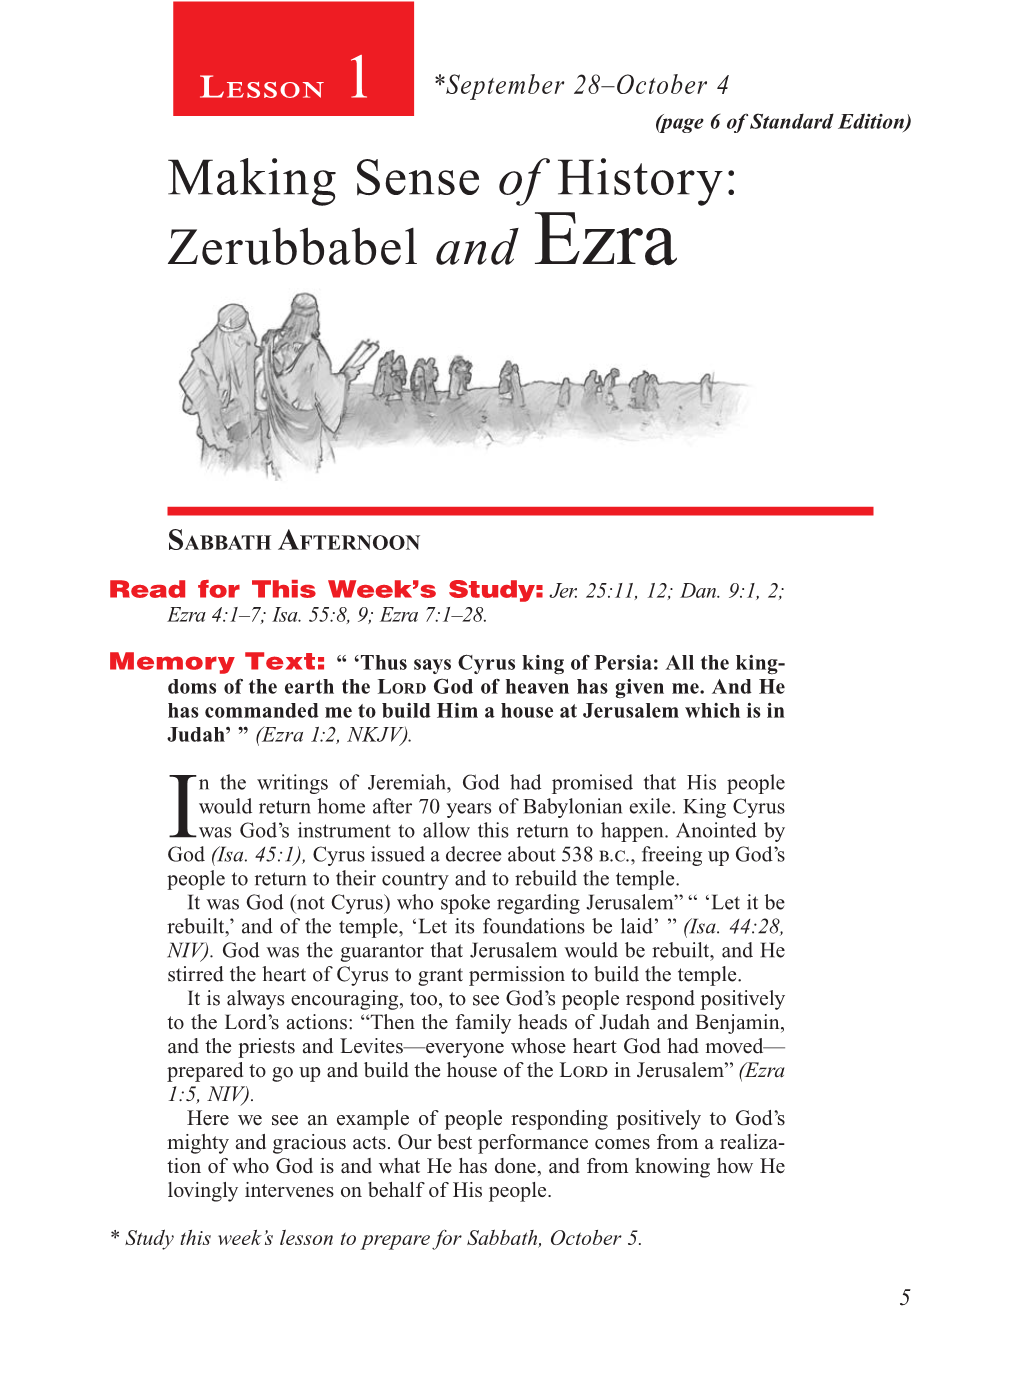 Zerubbabel and Ezra